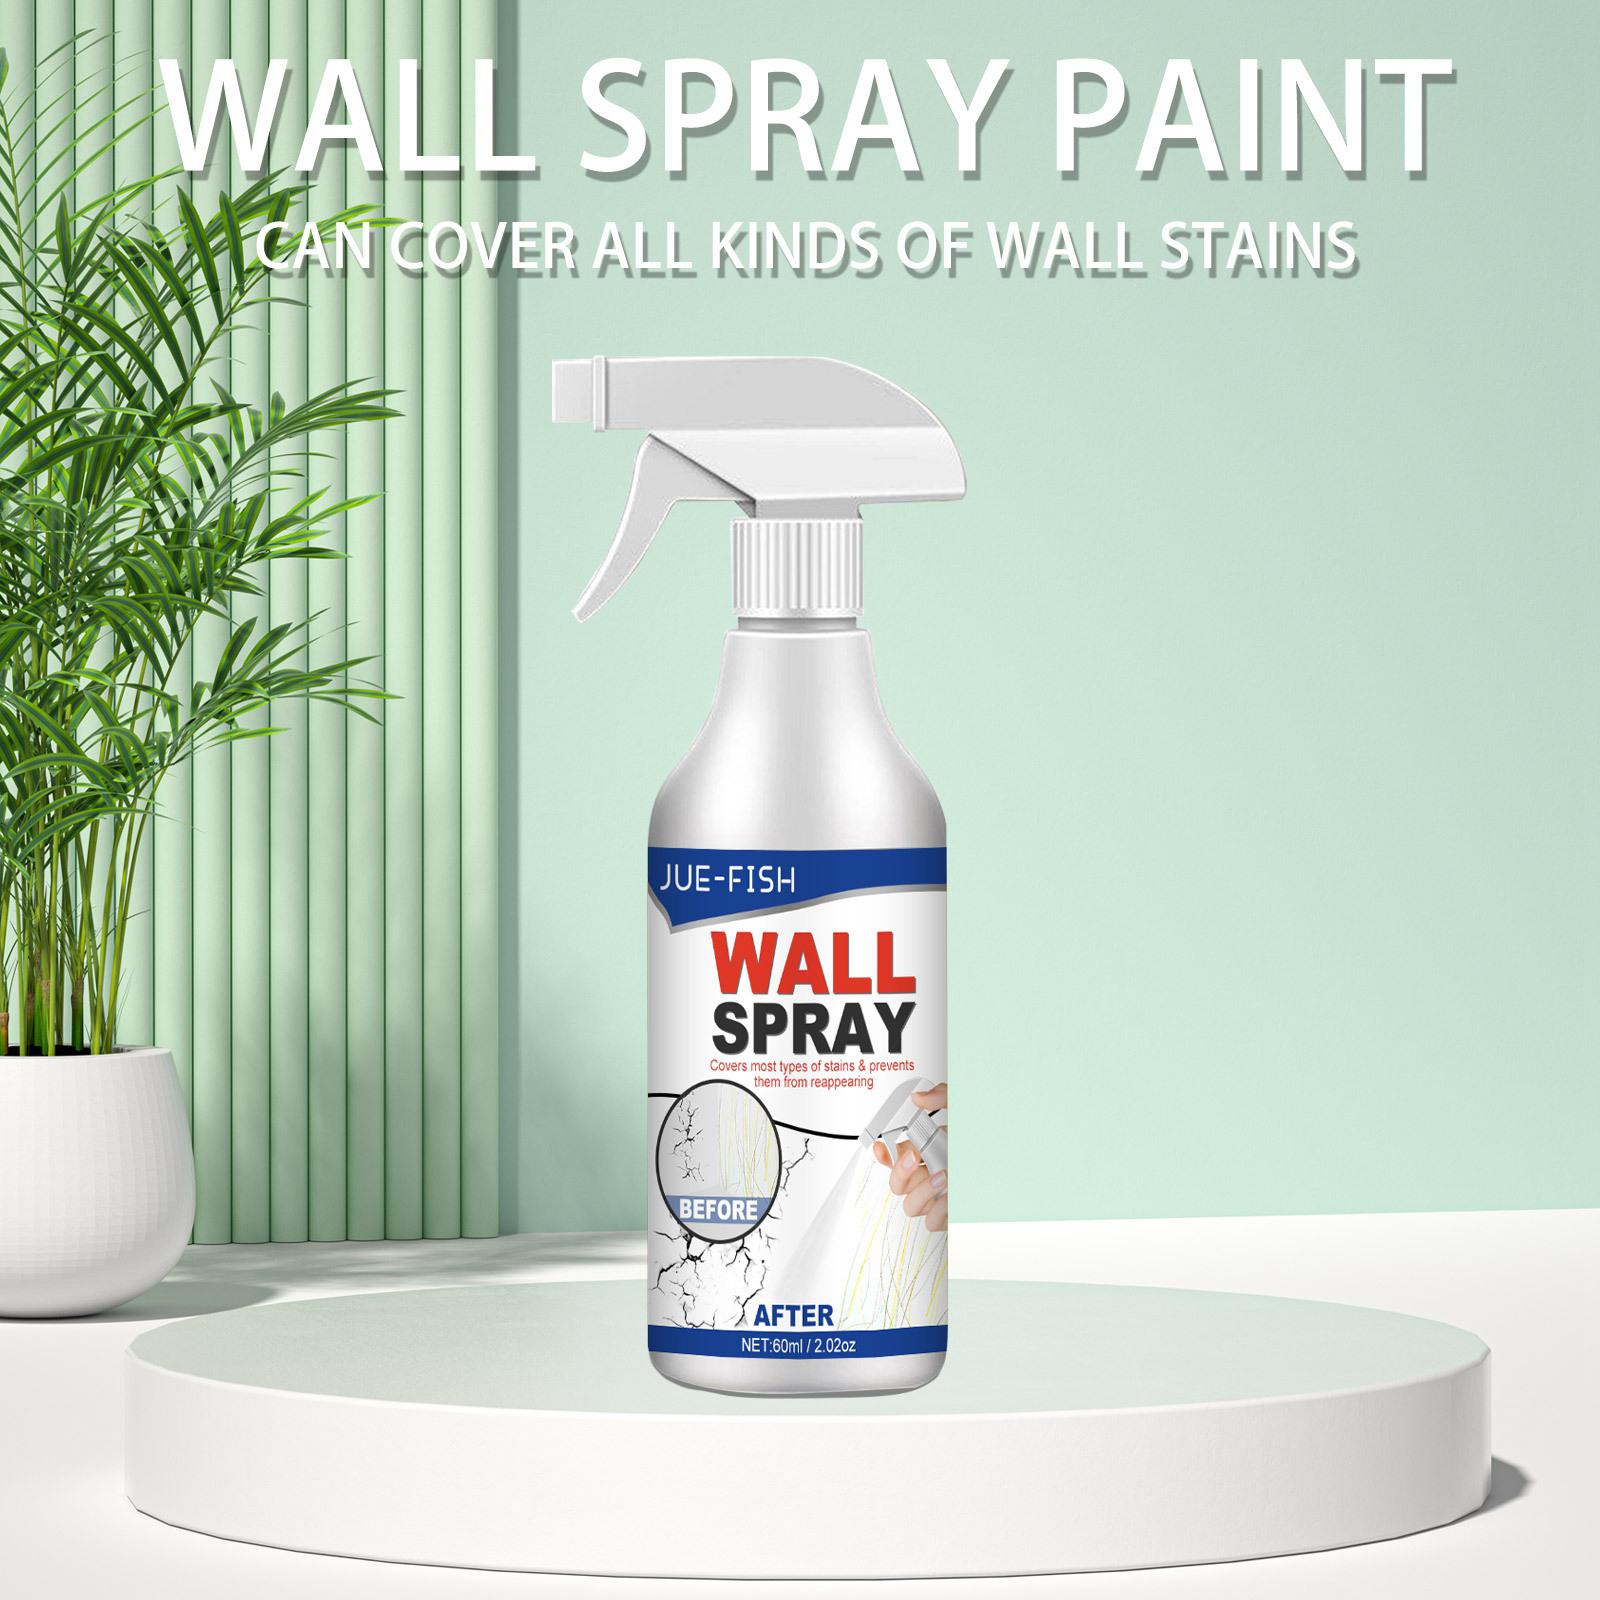 Wall Spray Paint Graffiti Repair Mending Stain for Bedroom Bathroom